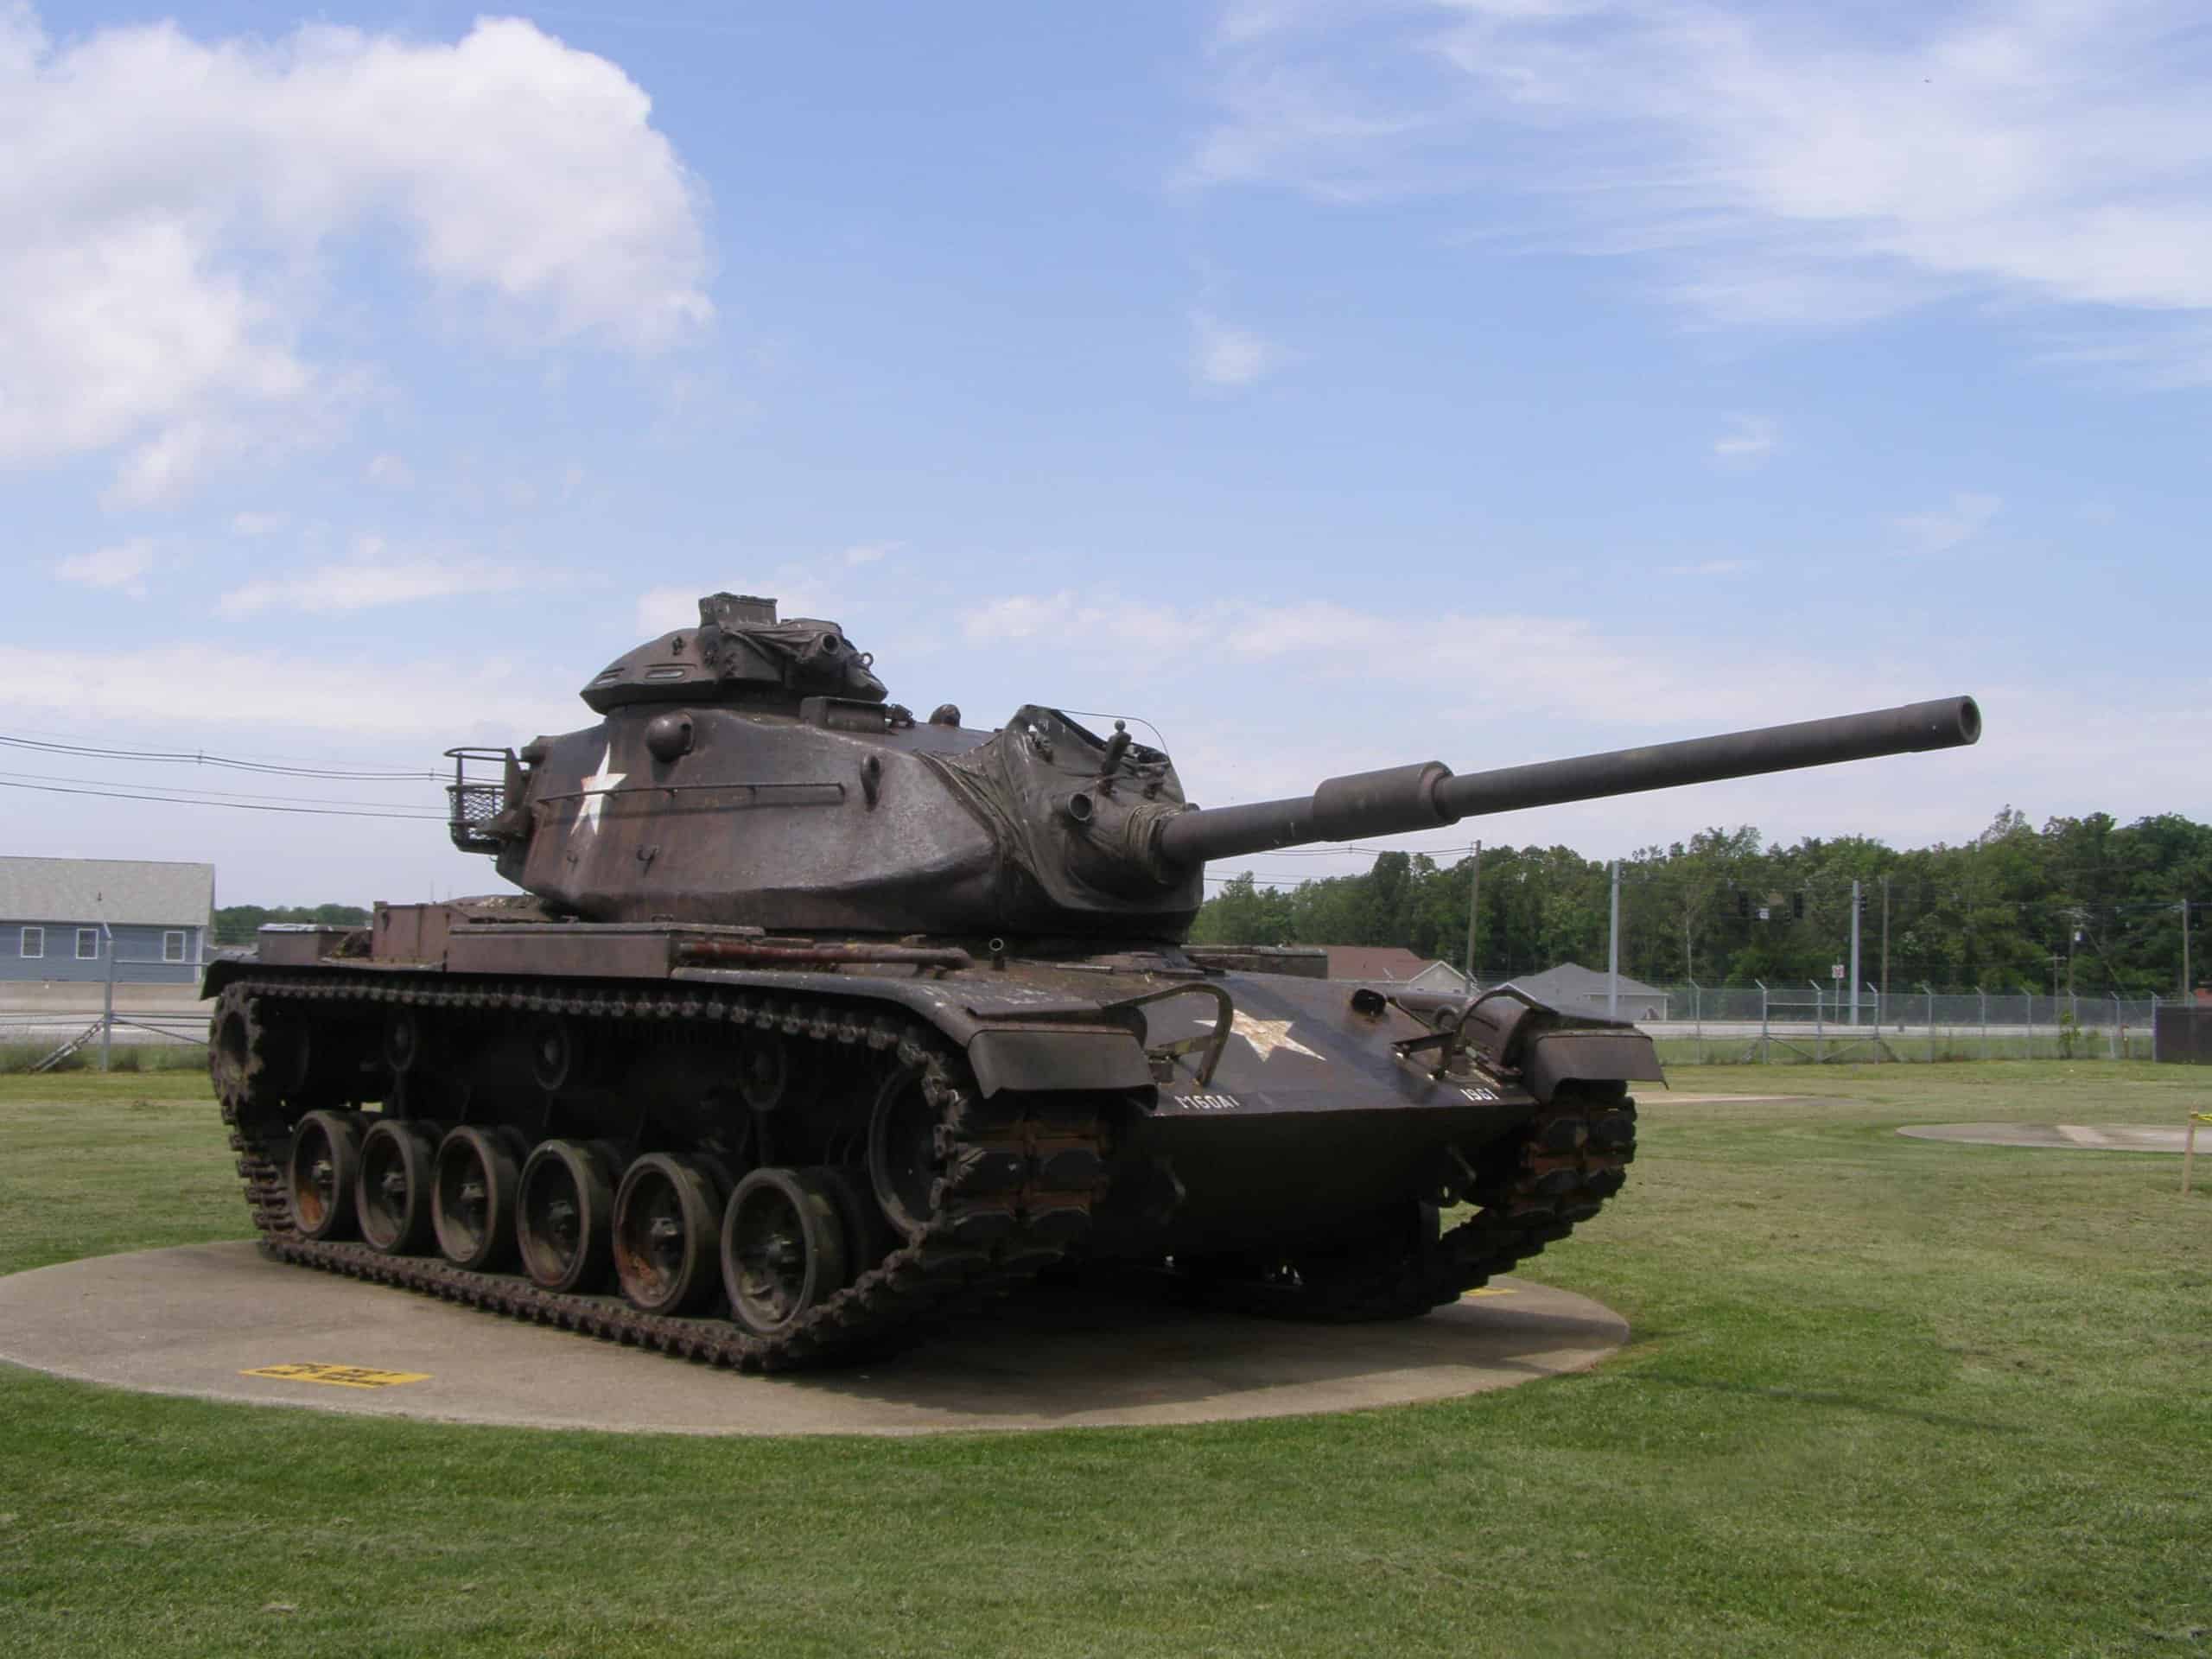 M60 Patton 'Patton Tank' P5250358 by Chris Light